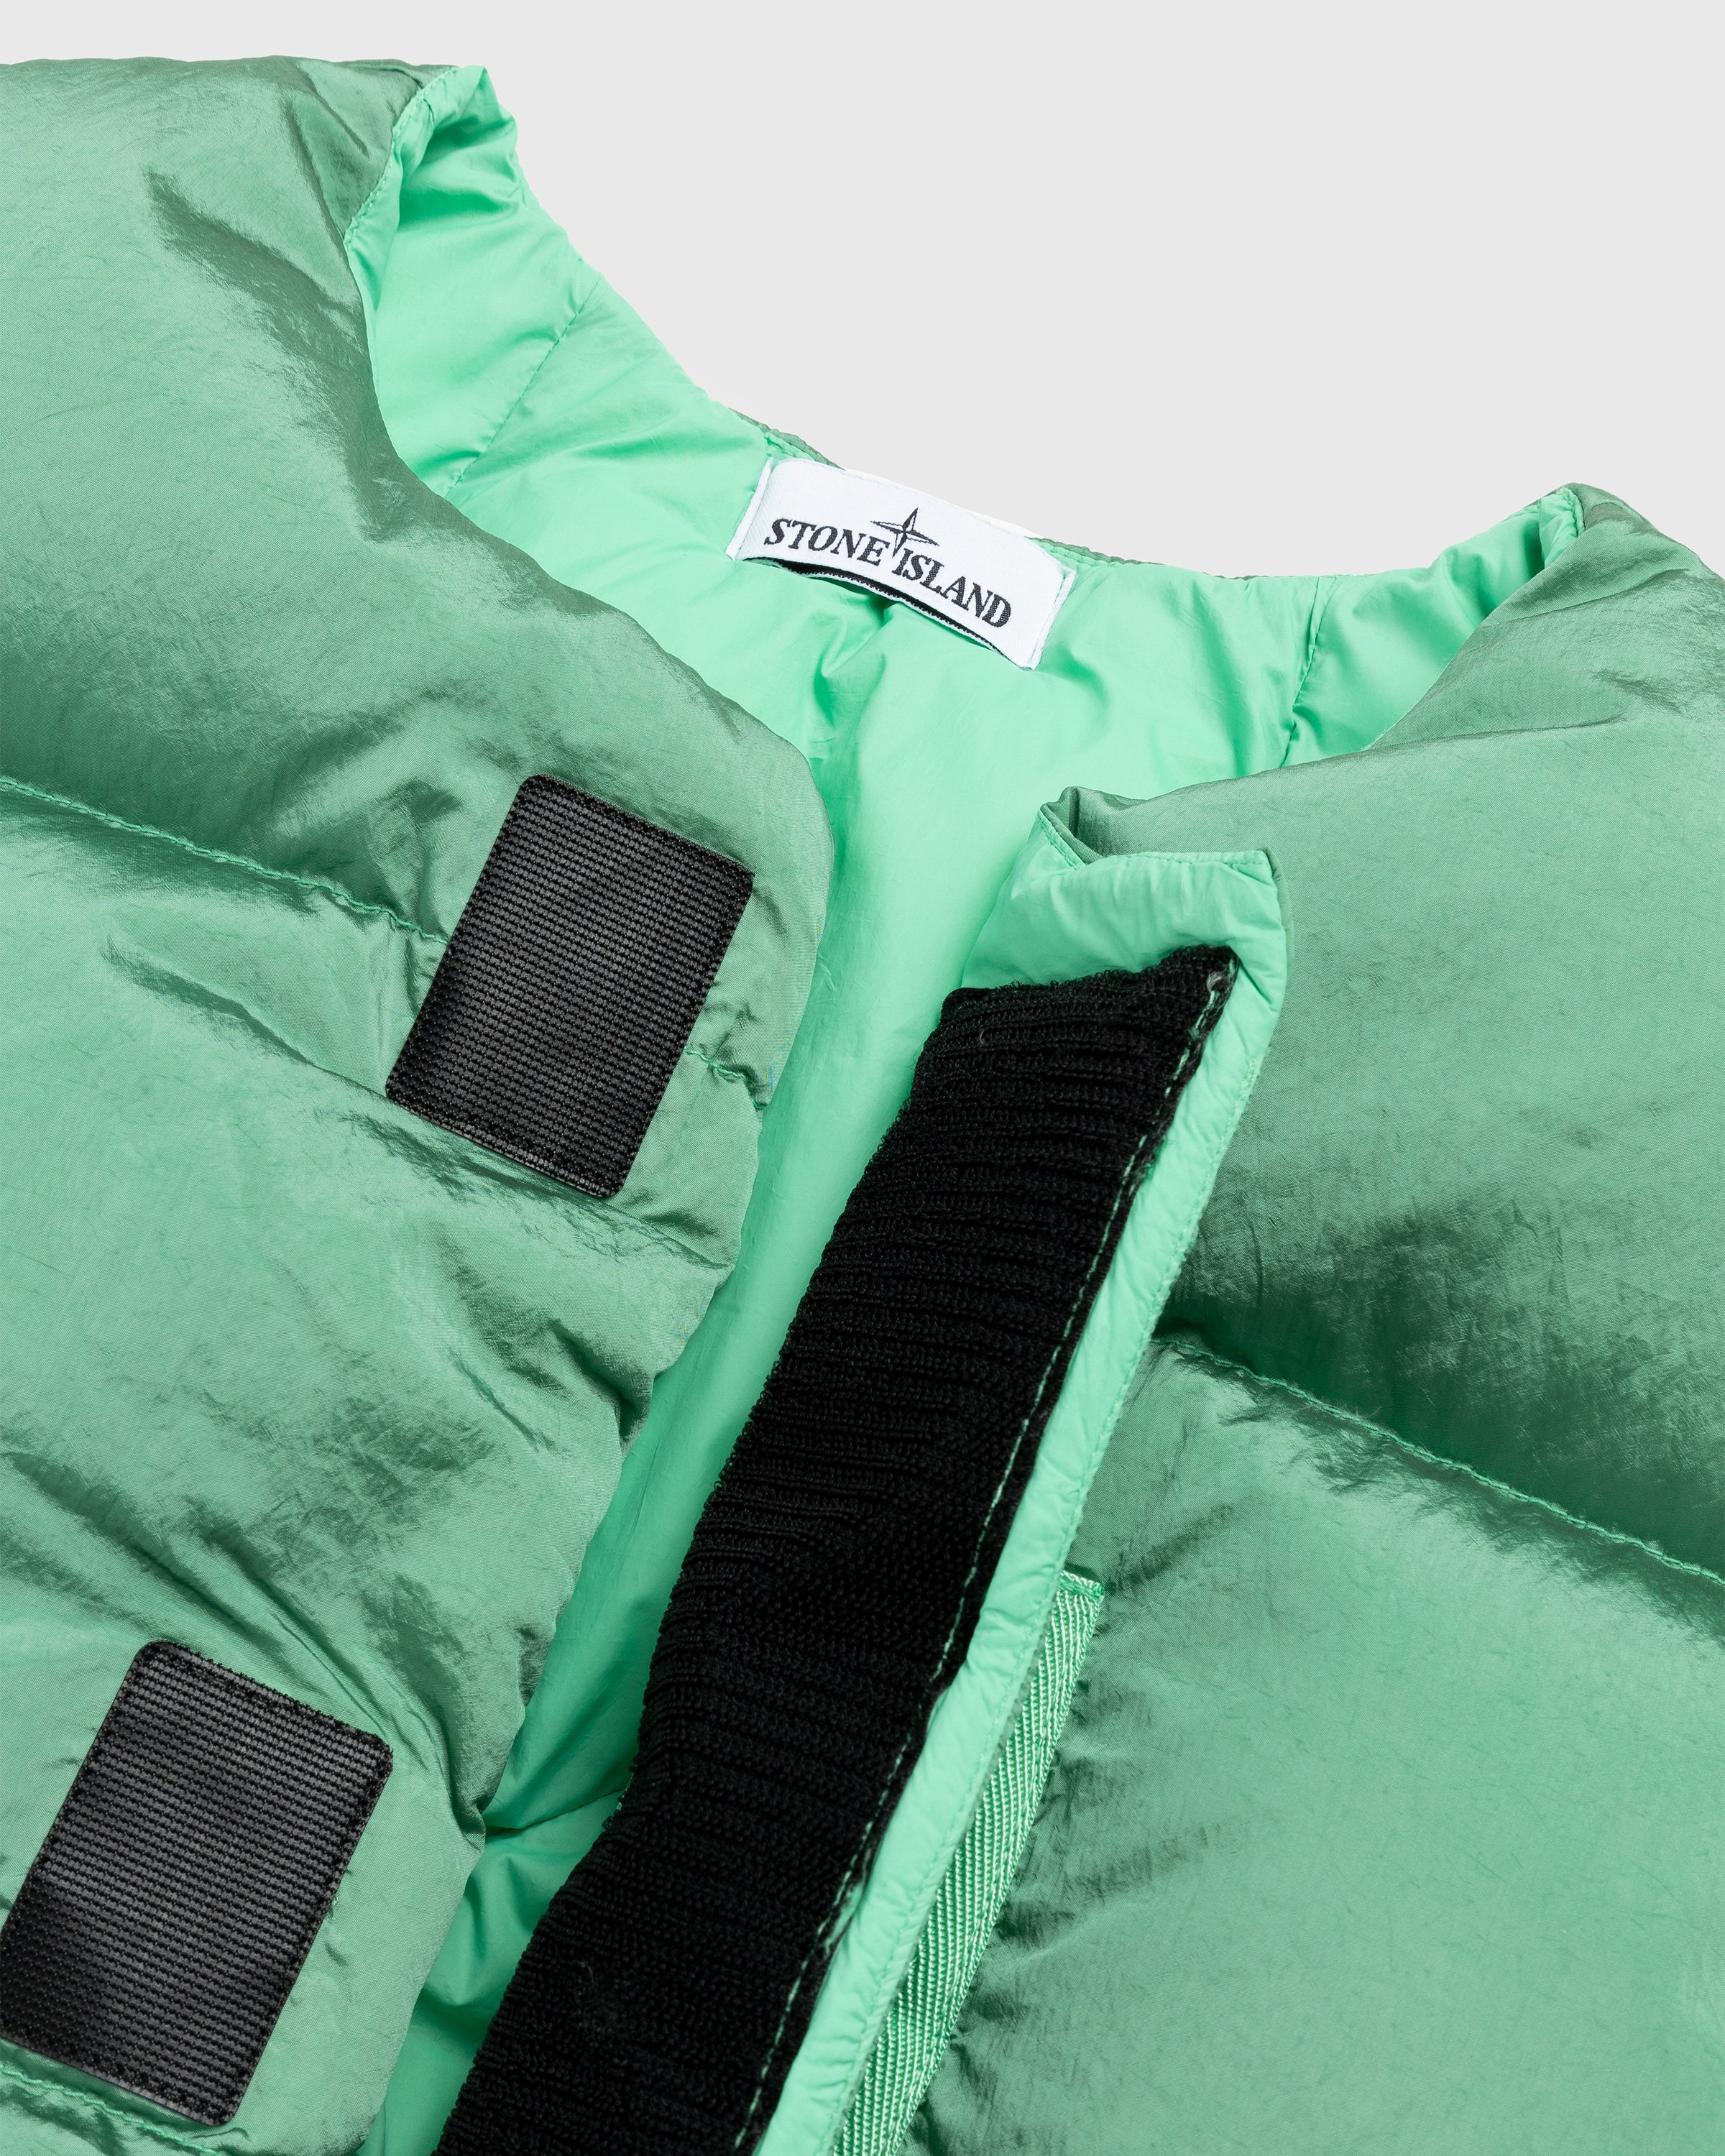 Stone Island - Nylon Metal Down Vest Light Green - Clothing - Green - Image 3